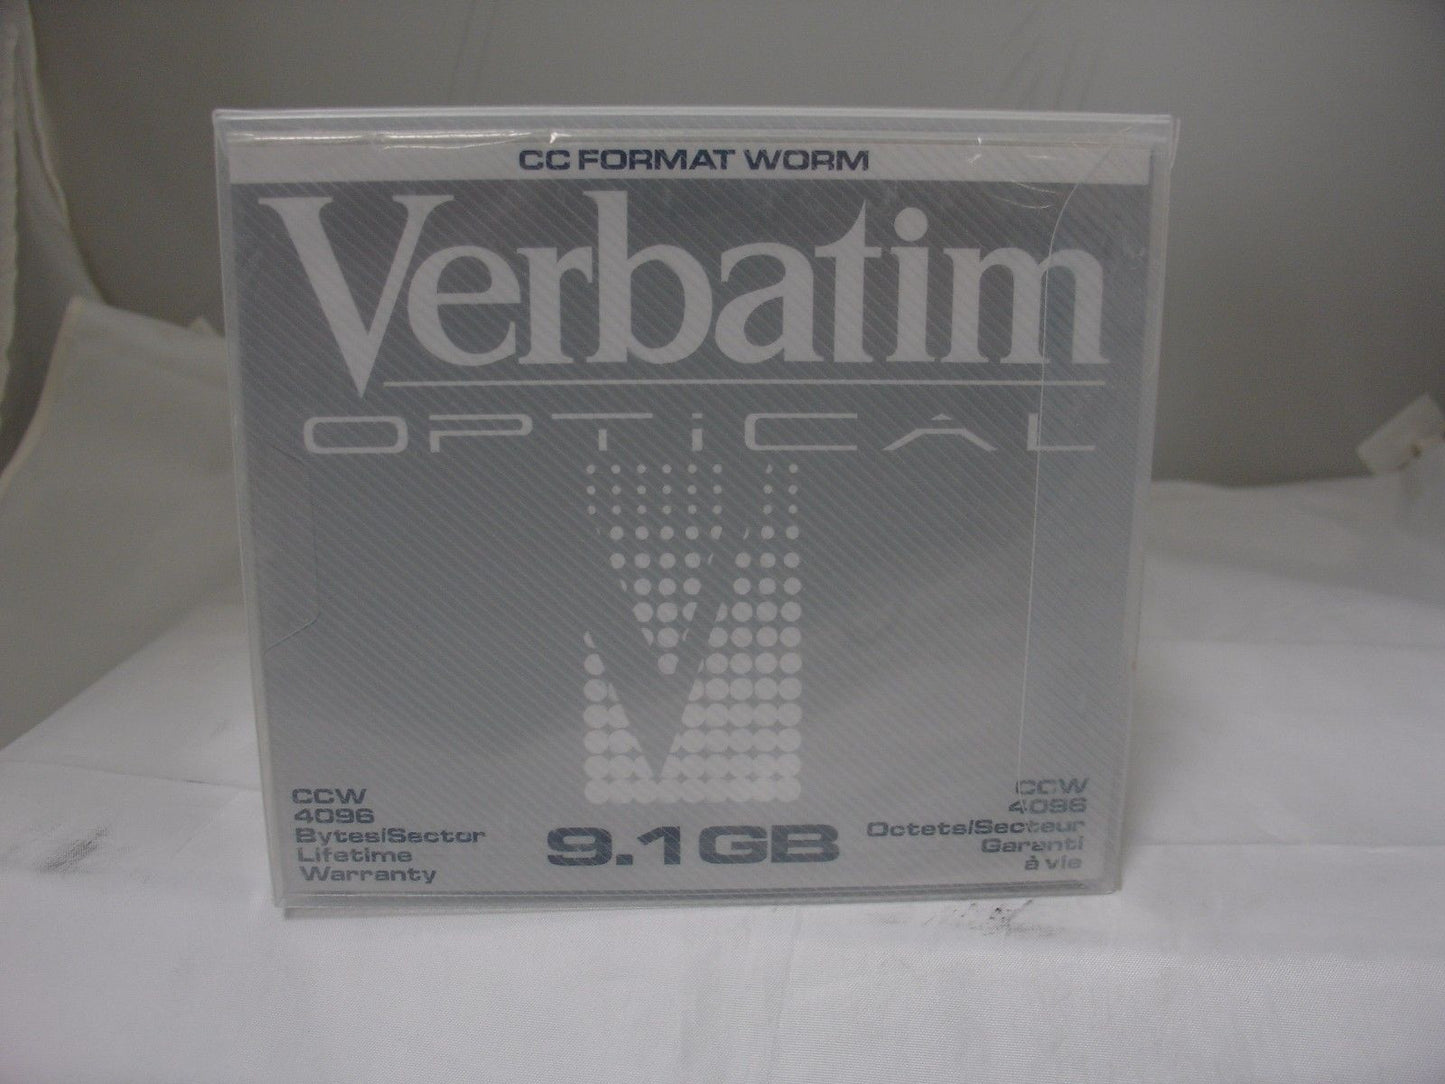 Verbatim 94124 9.1GB WORM Disk 1 piece  CWO-9100C C7984A - Micro Technologies (yourdrives.com)